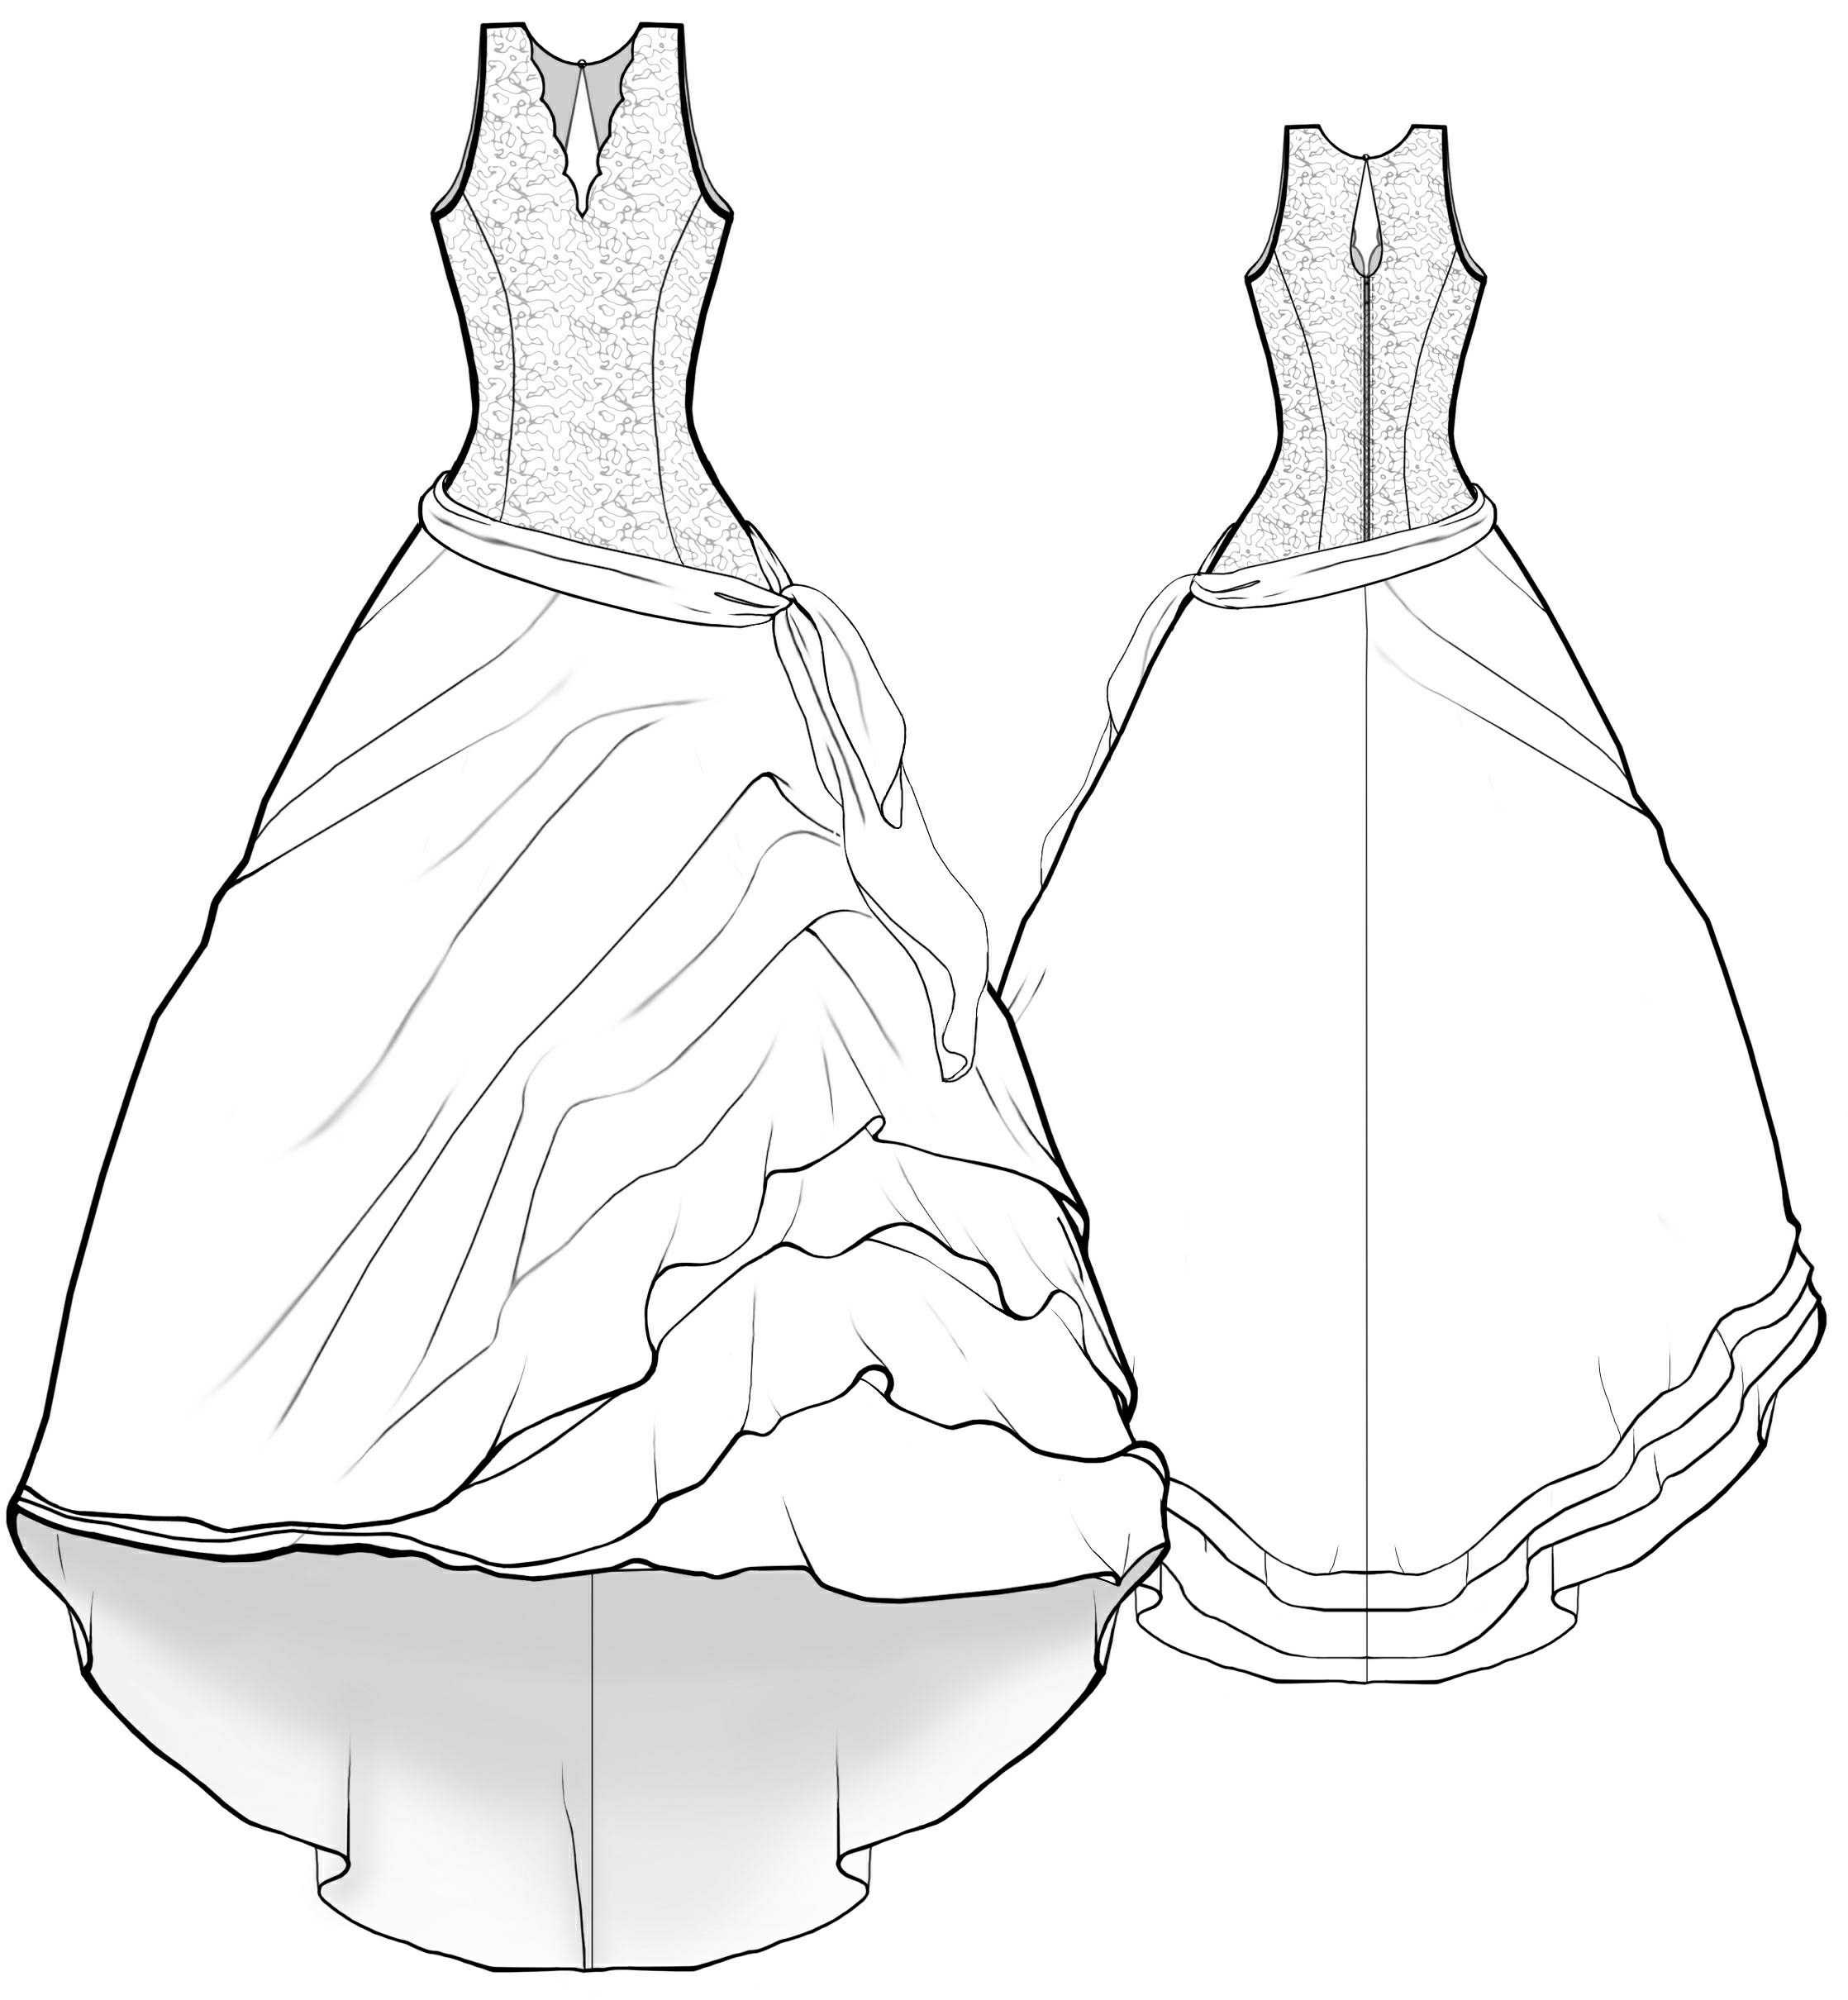  Wedding  Dress  With Multi Layered  Assymetrical Skirt 